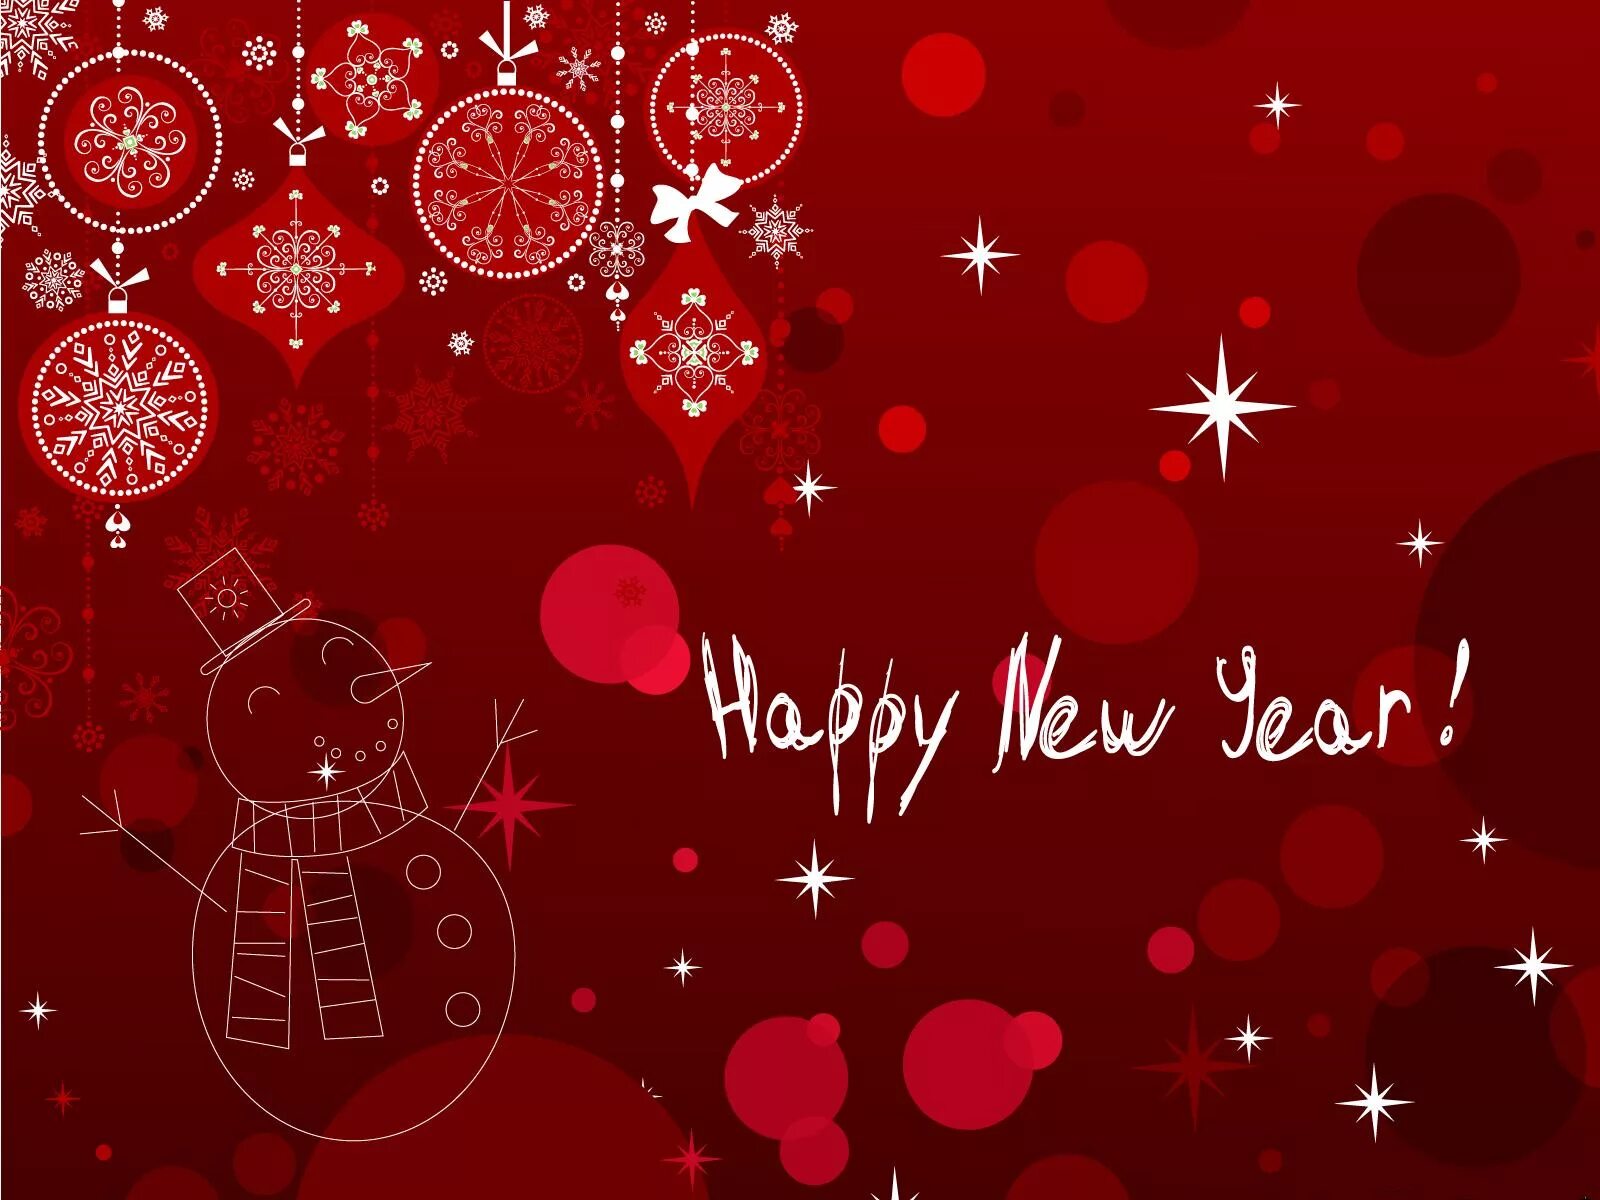 Happy new one. Happy New year открытки. Happy New year открытки на английском. Счастливого нового года. Новогодняя открытка по английскому.